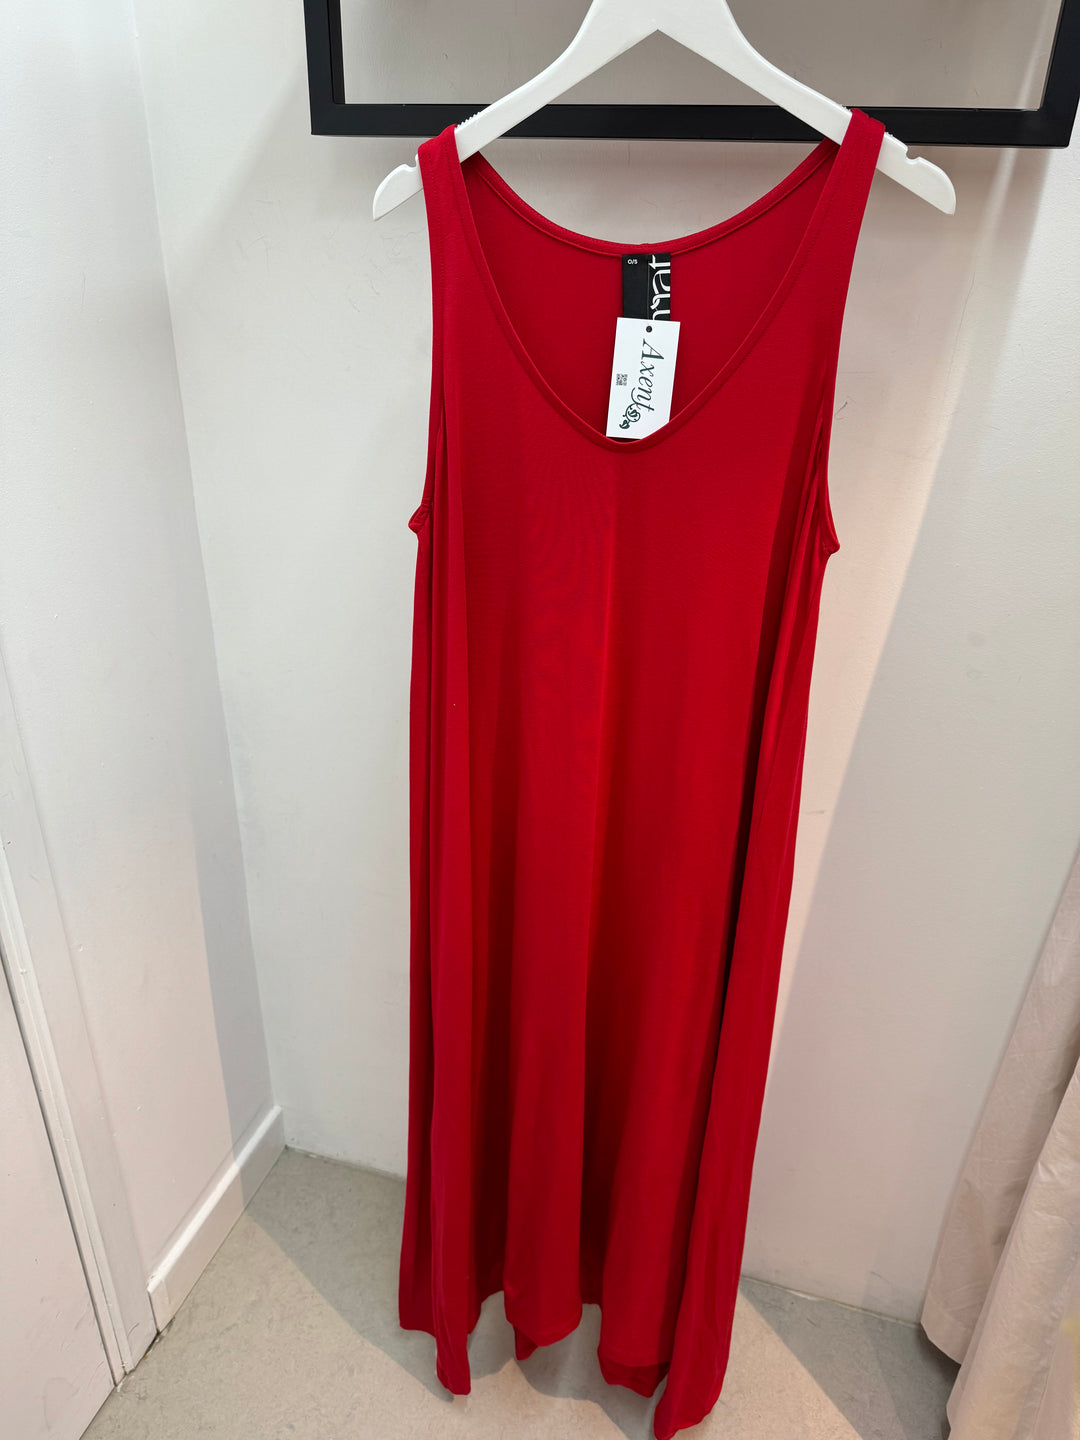 rode zomerse jurk-mat fashion-0000.7502.C -red